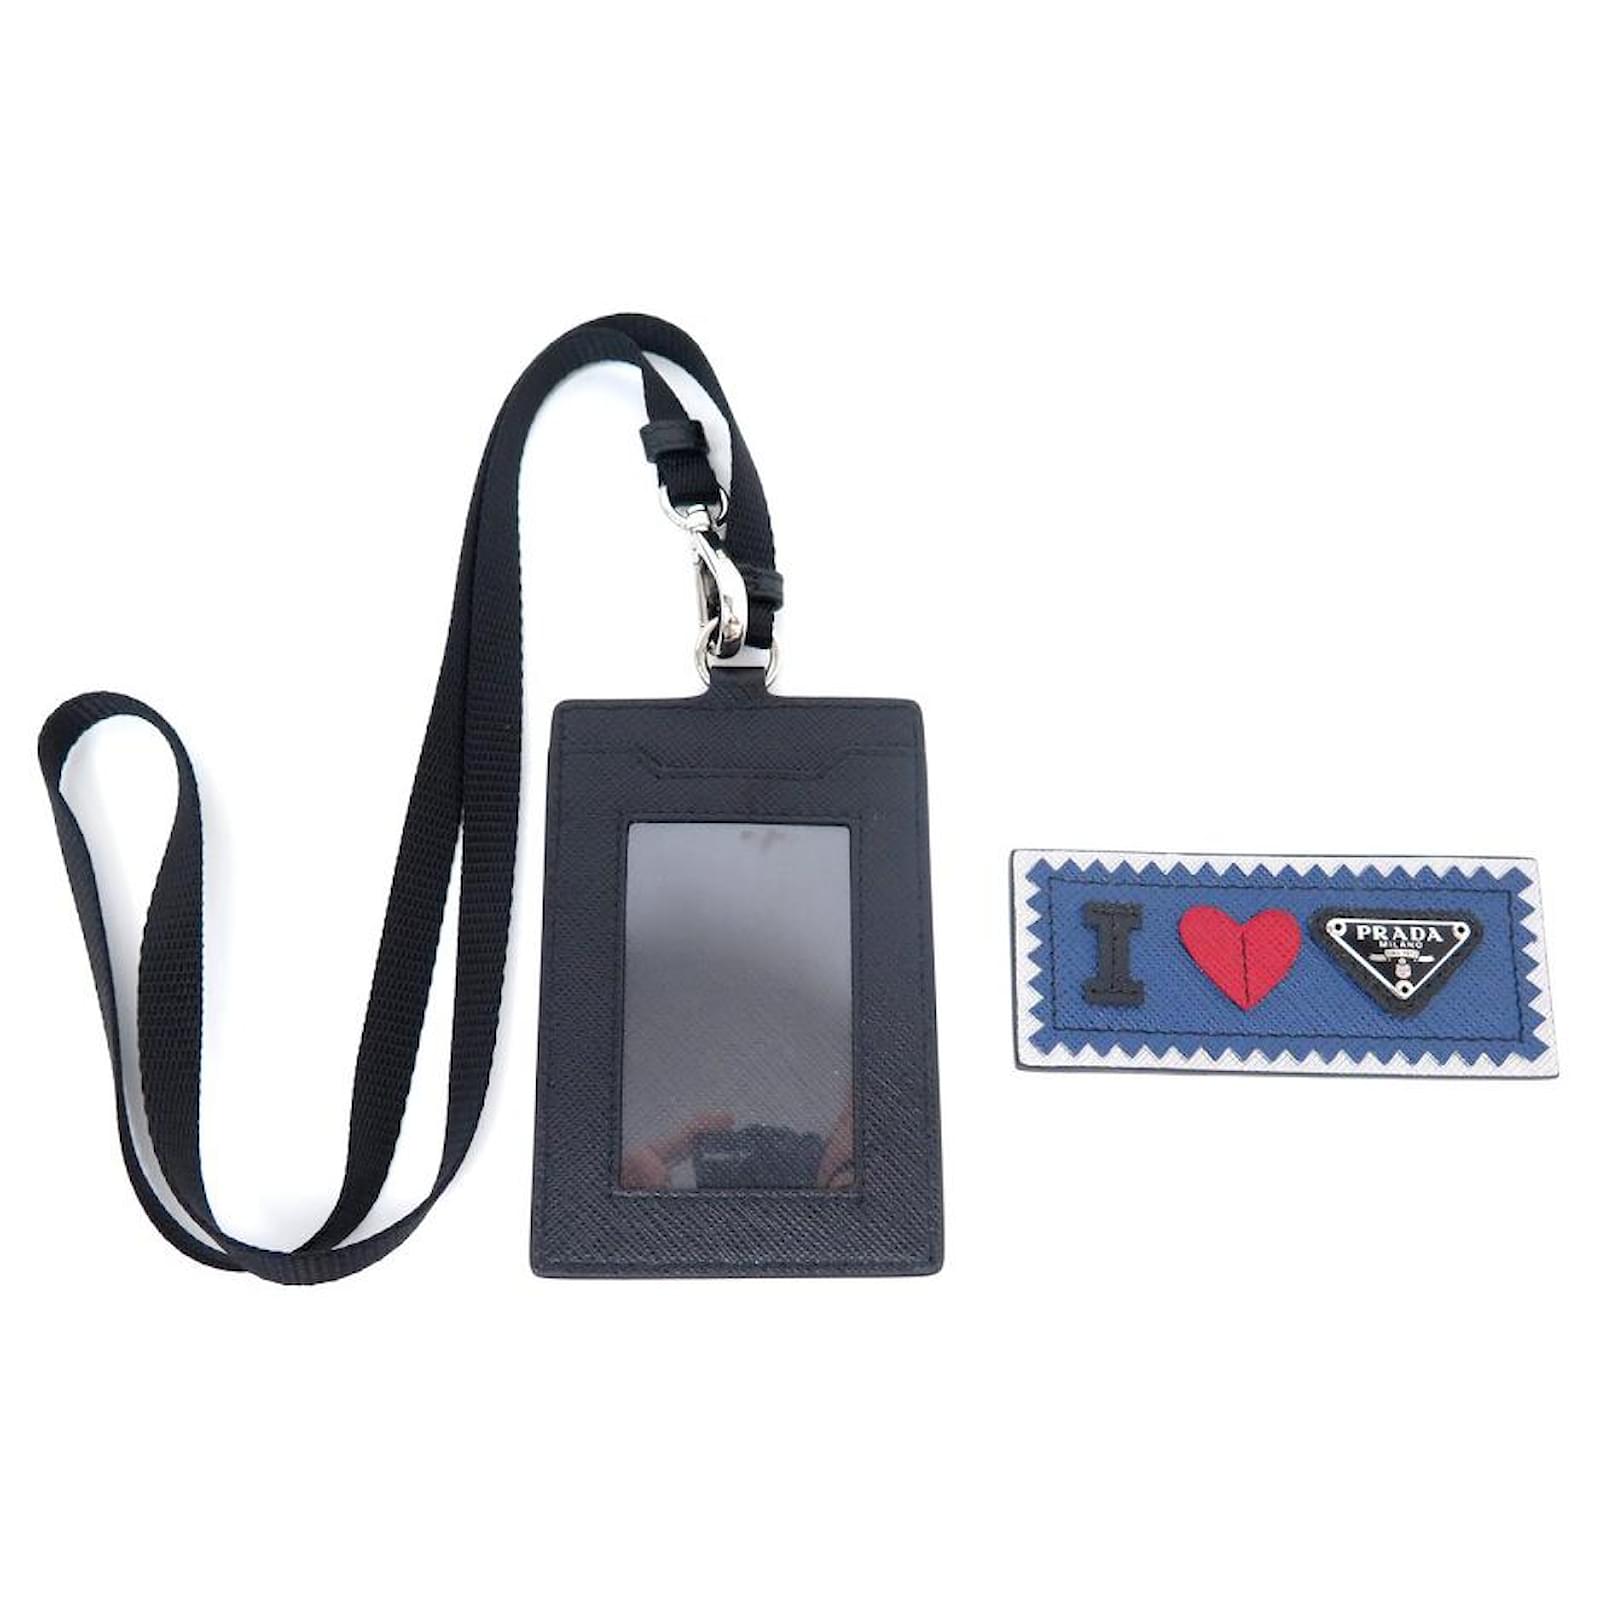 Prada Saffiano Leather Badge Holder Purses & Pouches